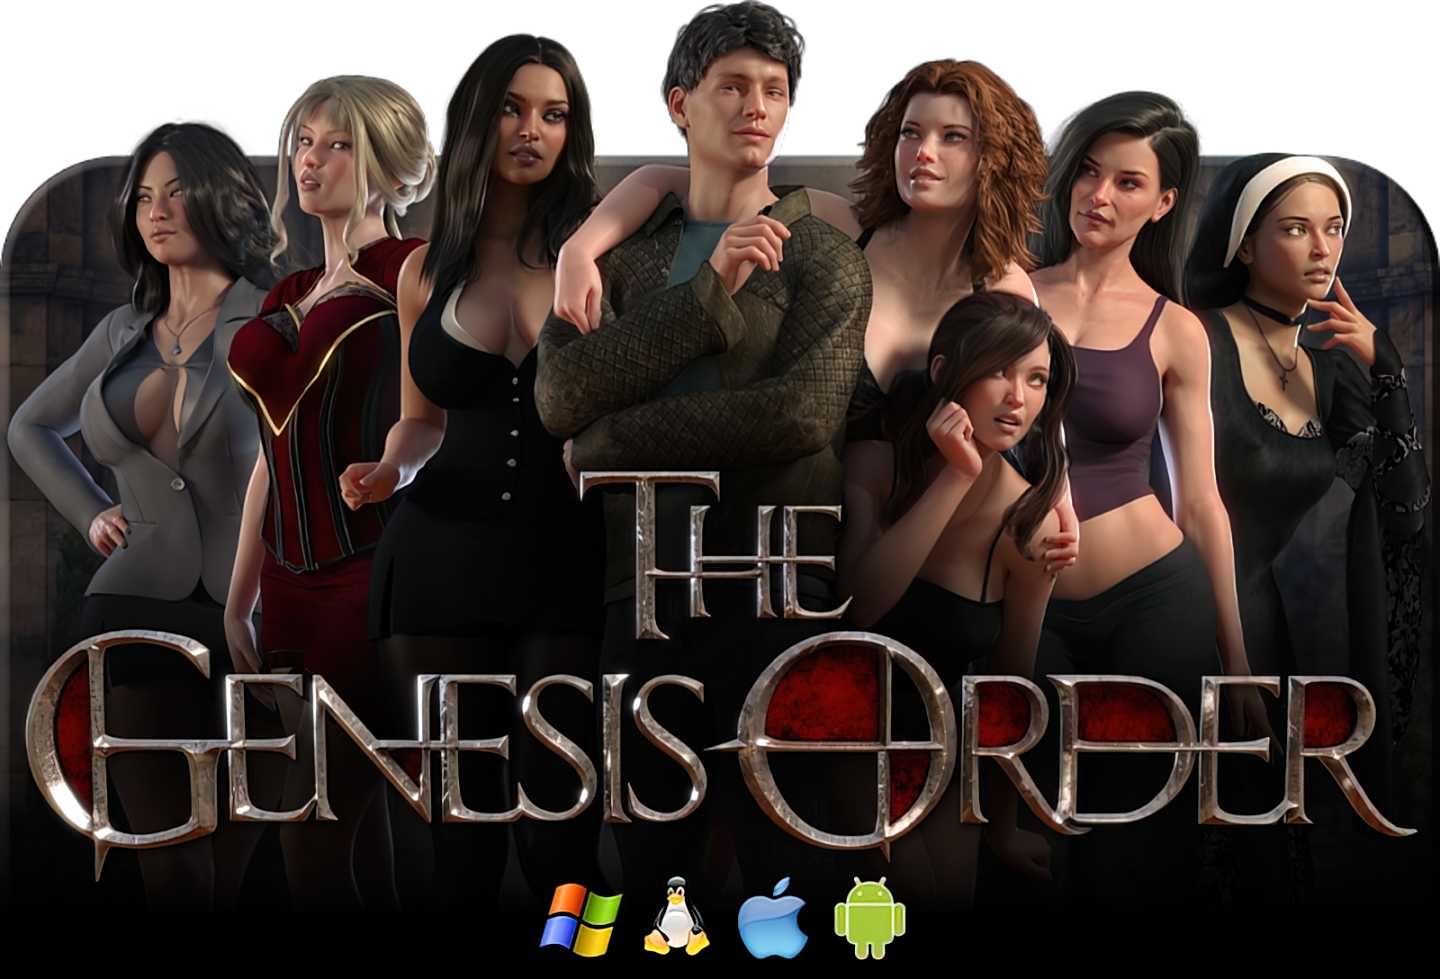 The genesis order porn games